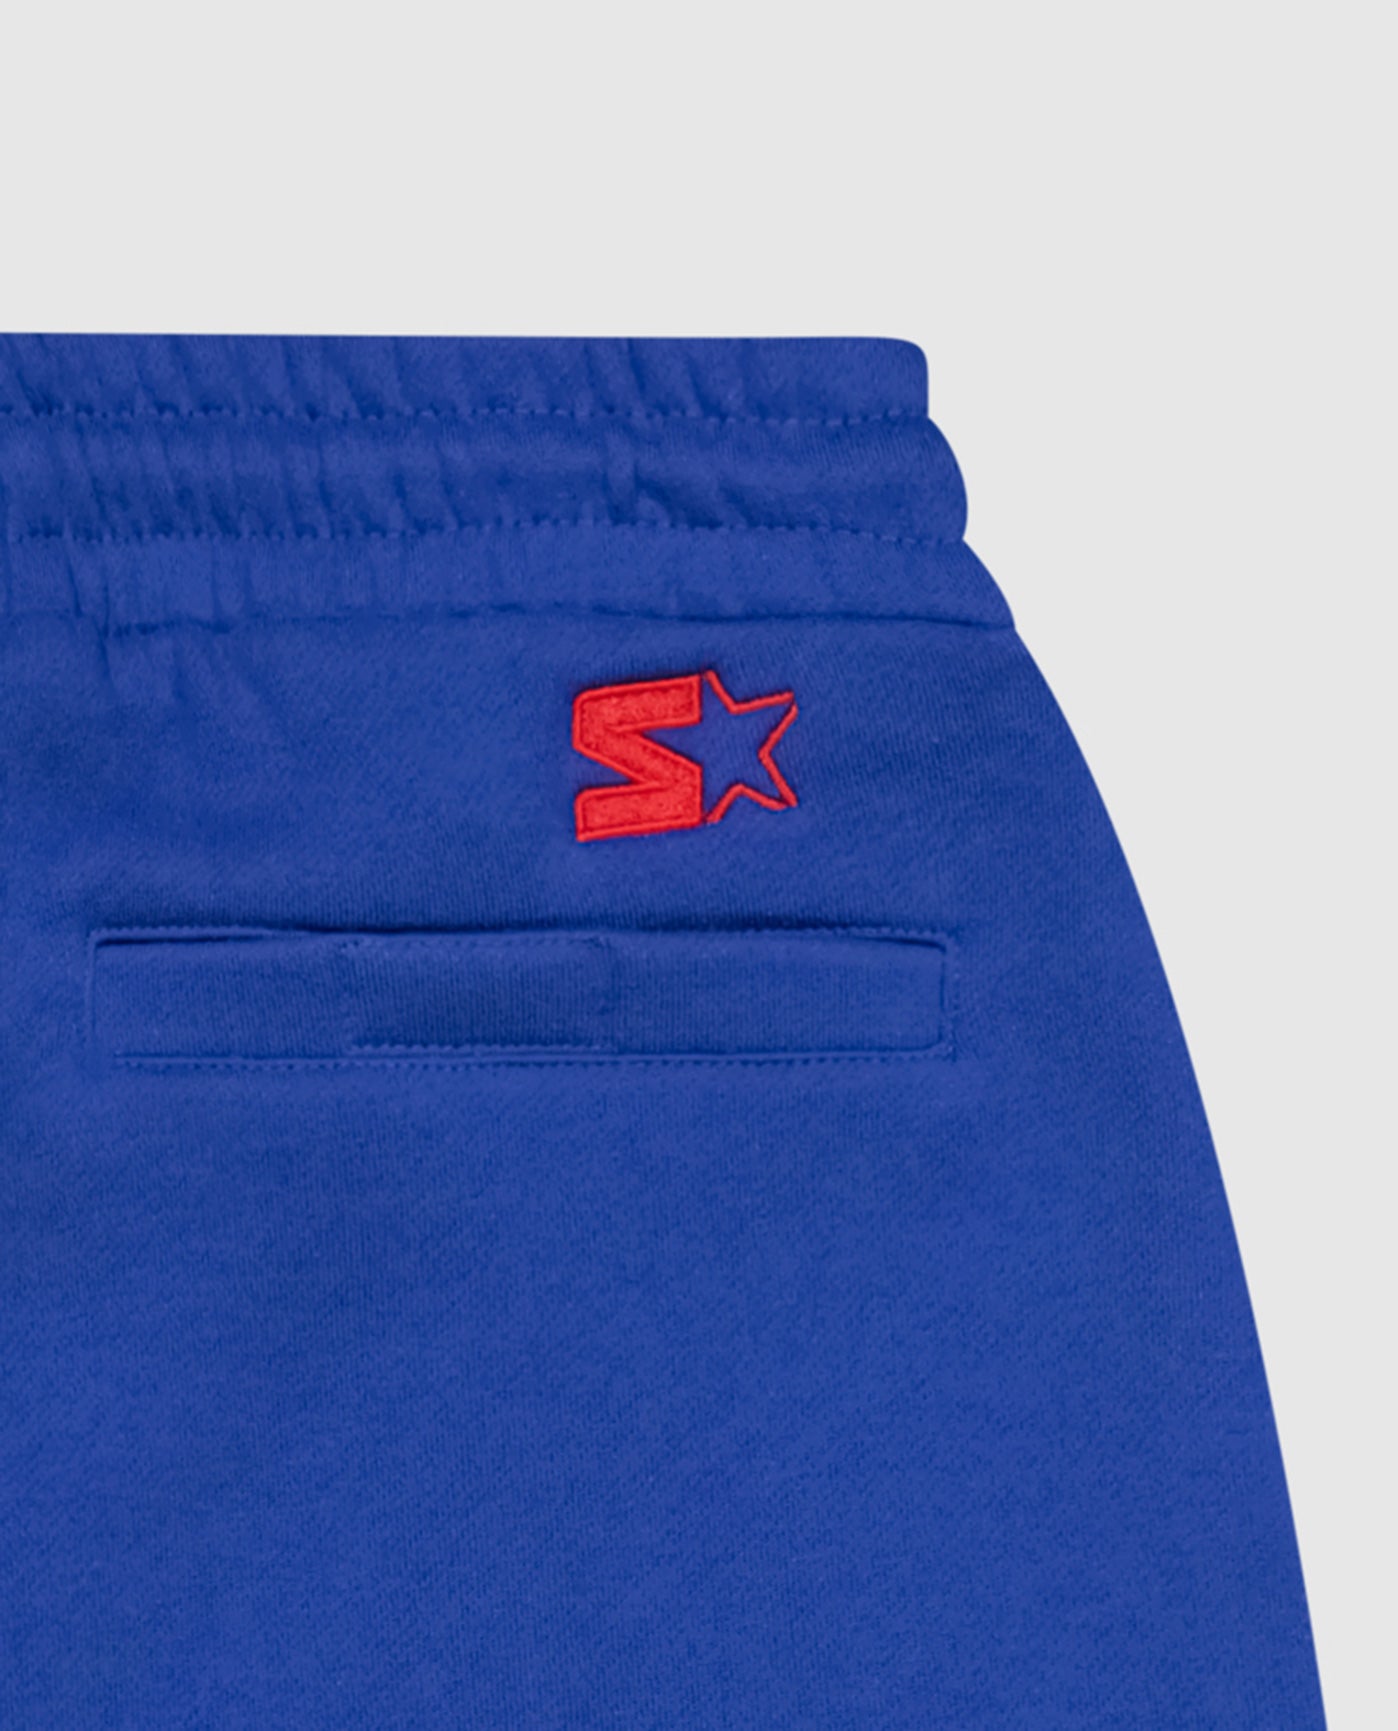 Starter logo below the right waist back graphic | Patriots Blue